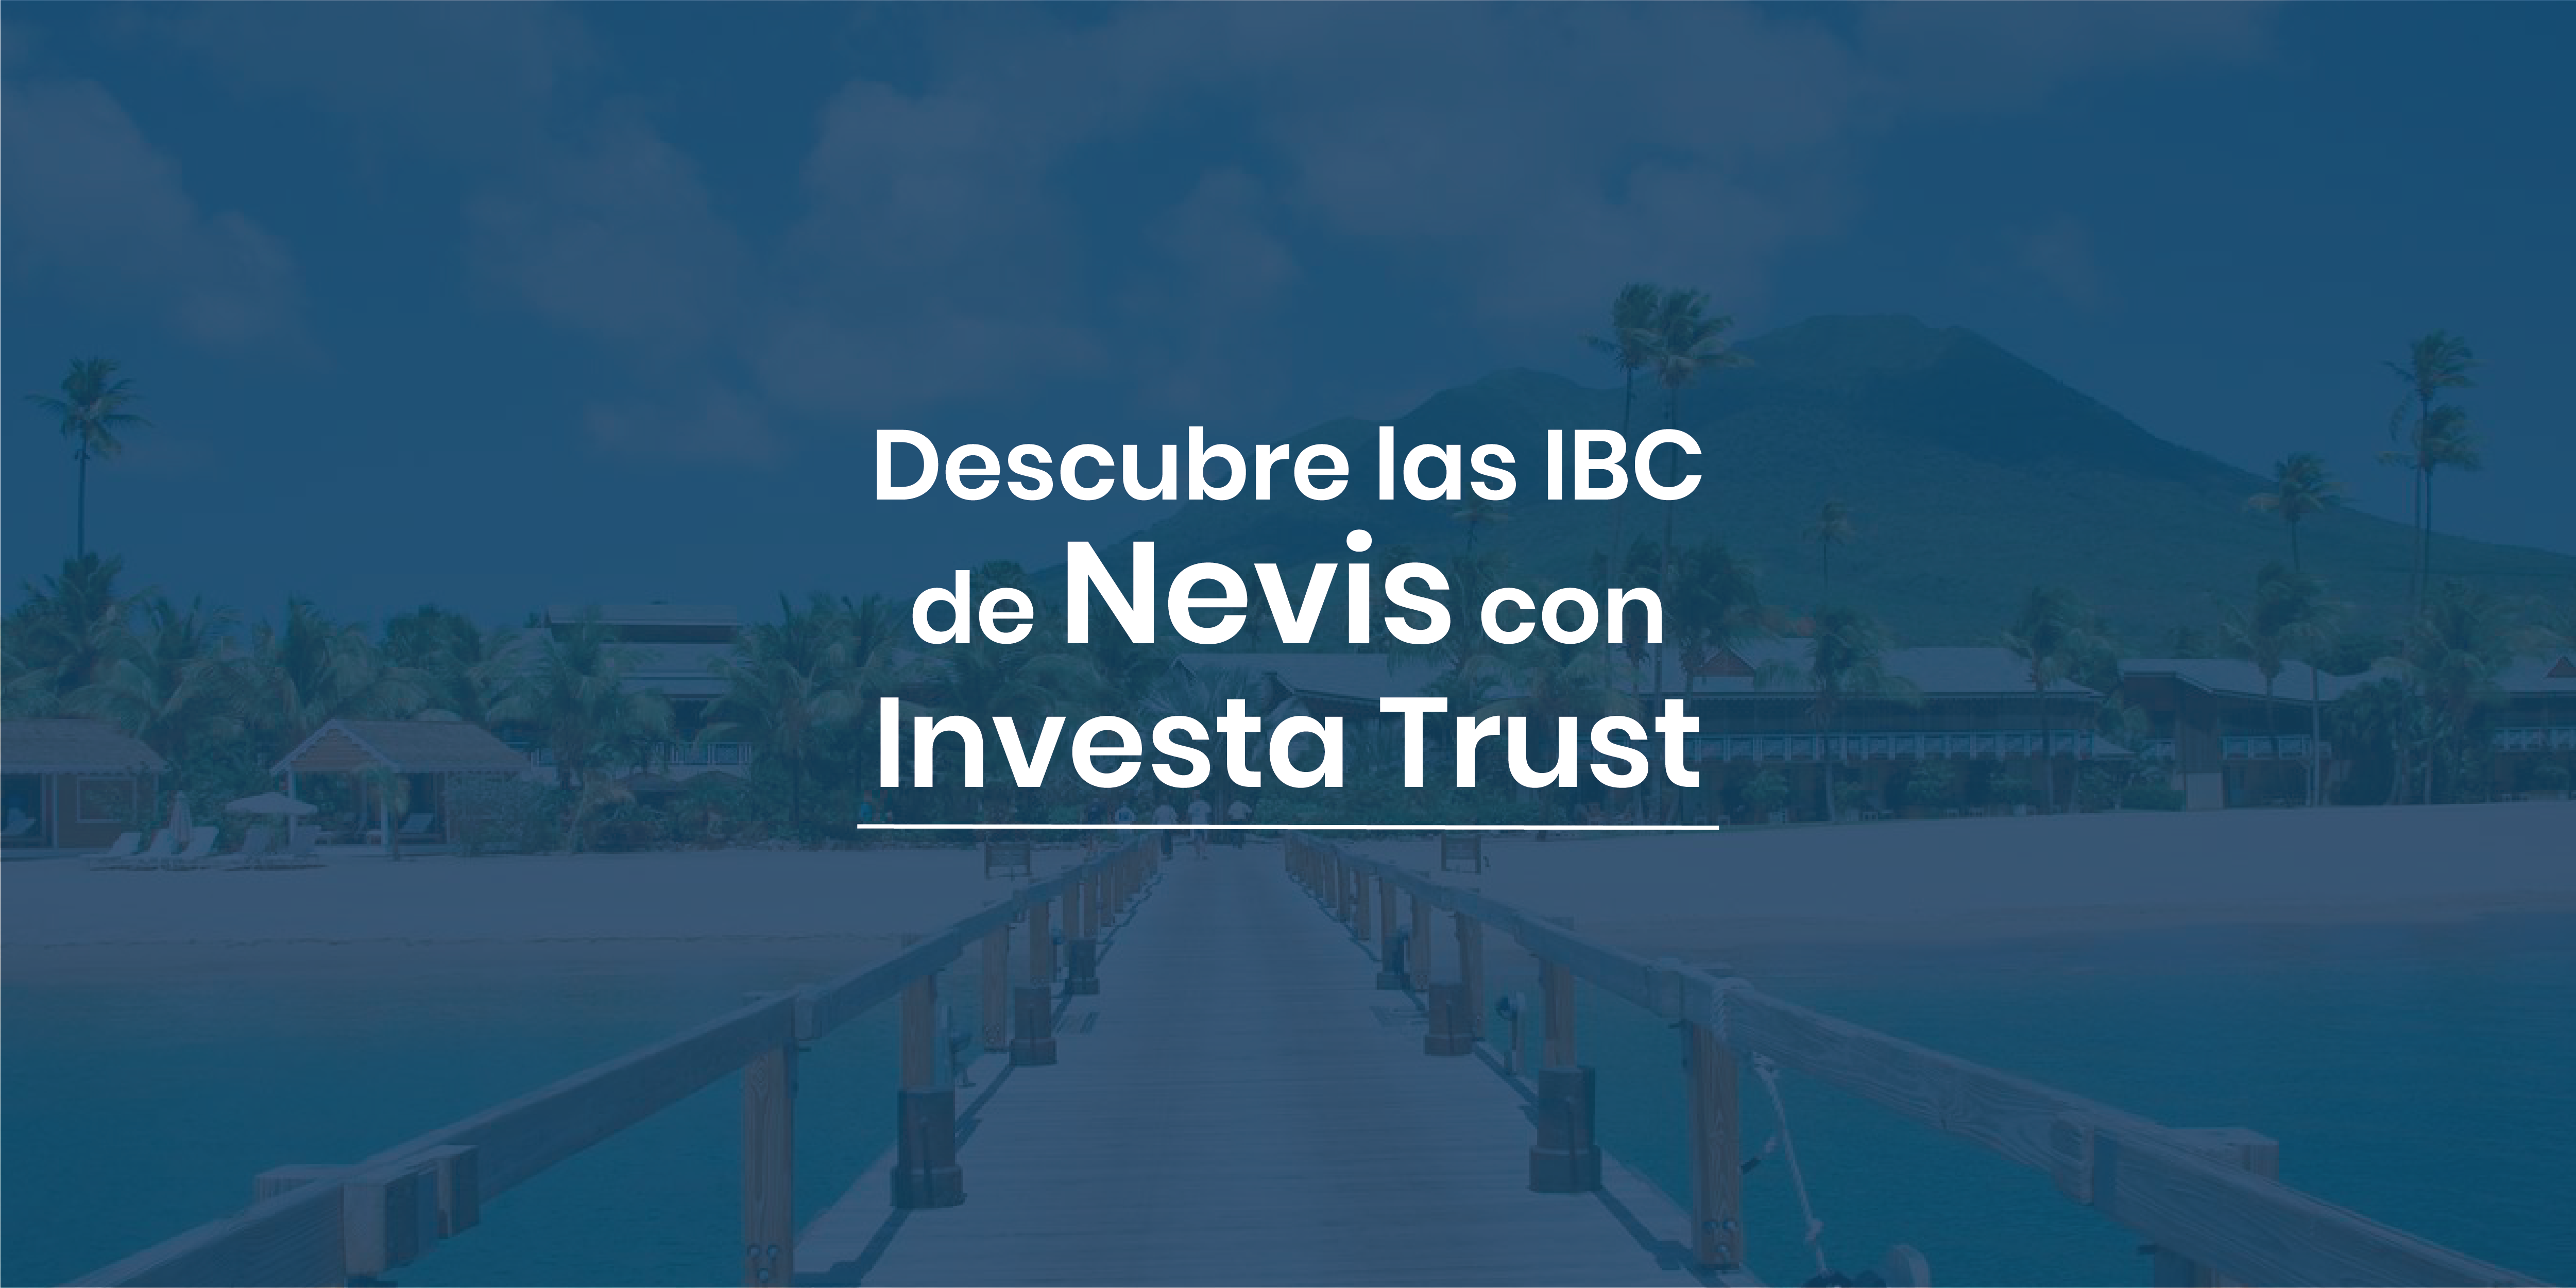 Descubre las IBC de Nevis con Investa Trust